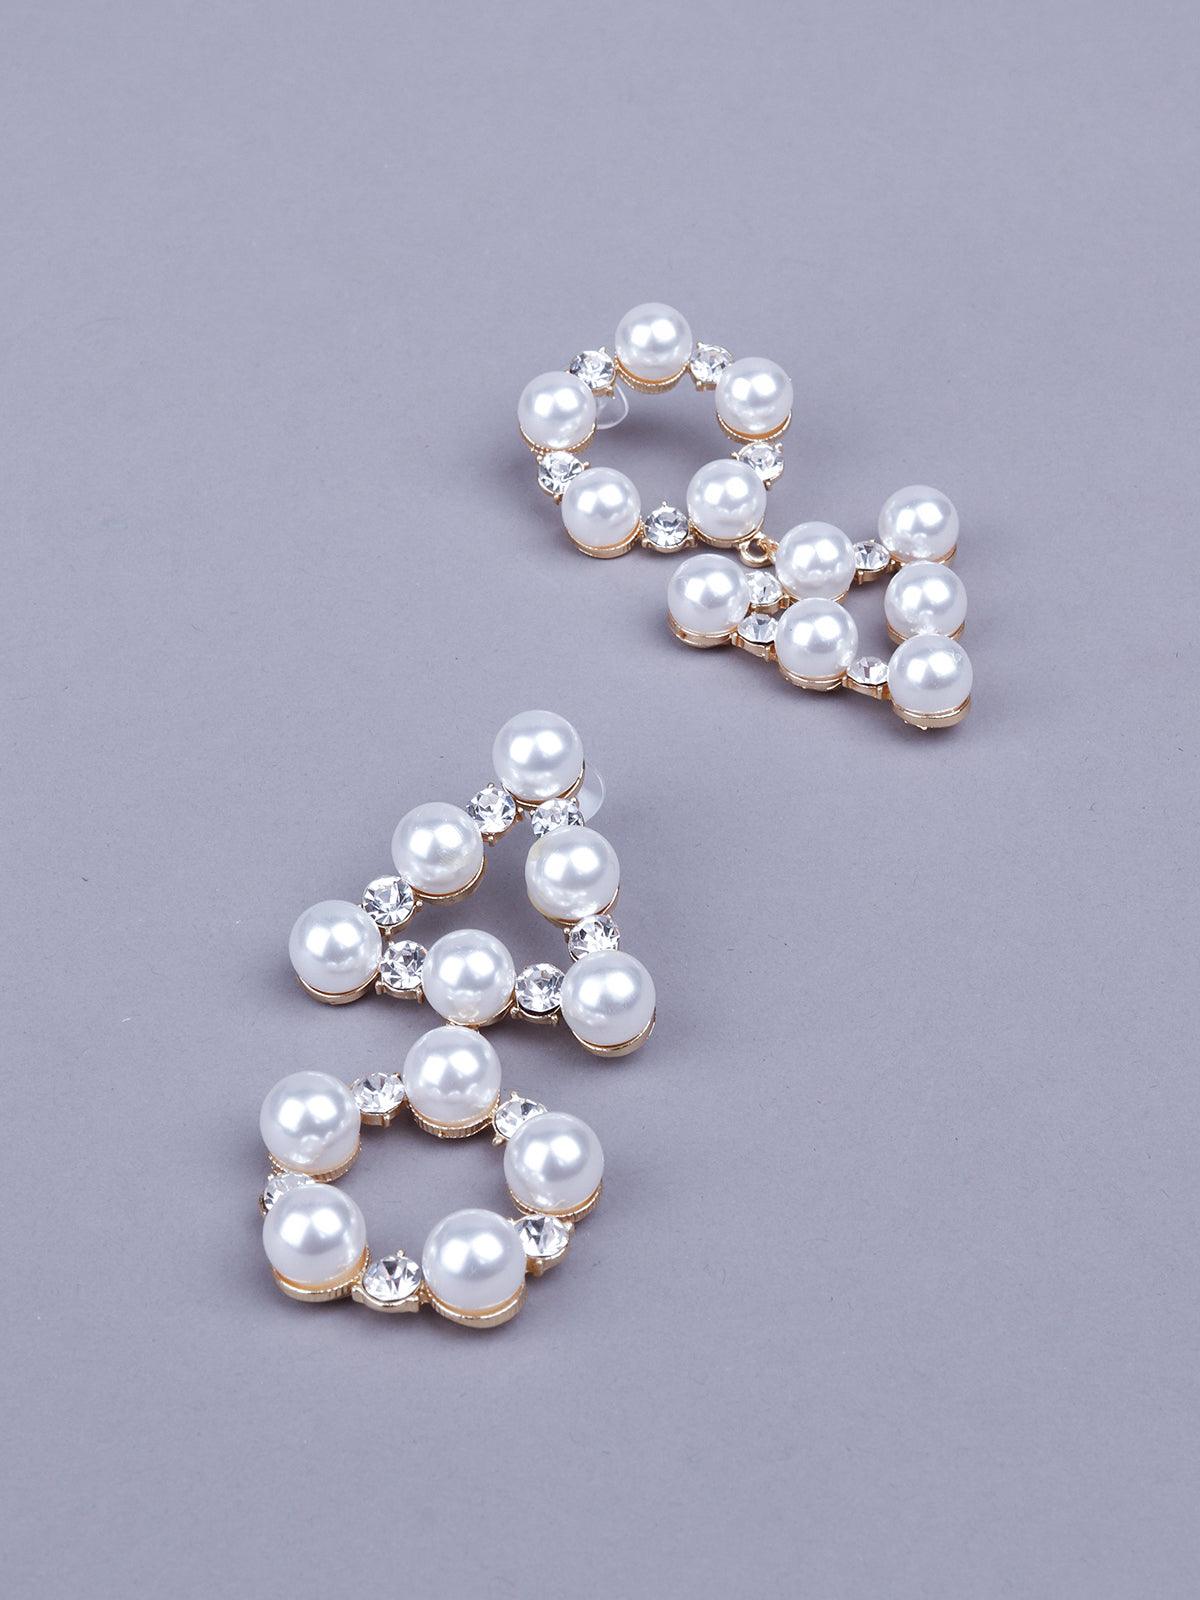 Stunning artificial pearl statement earrings - Odette